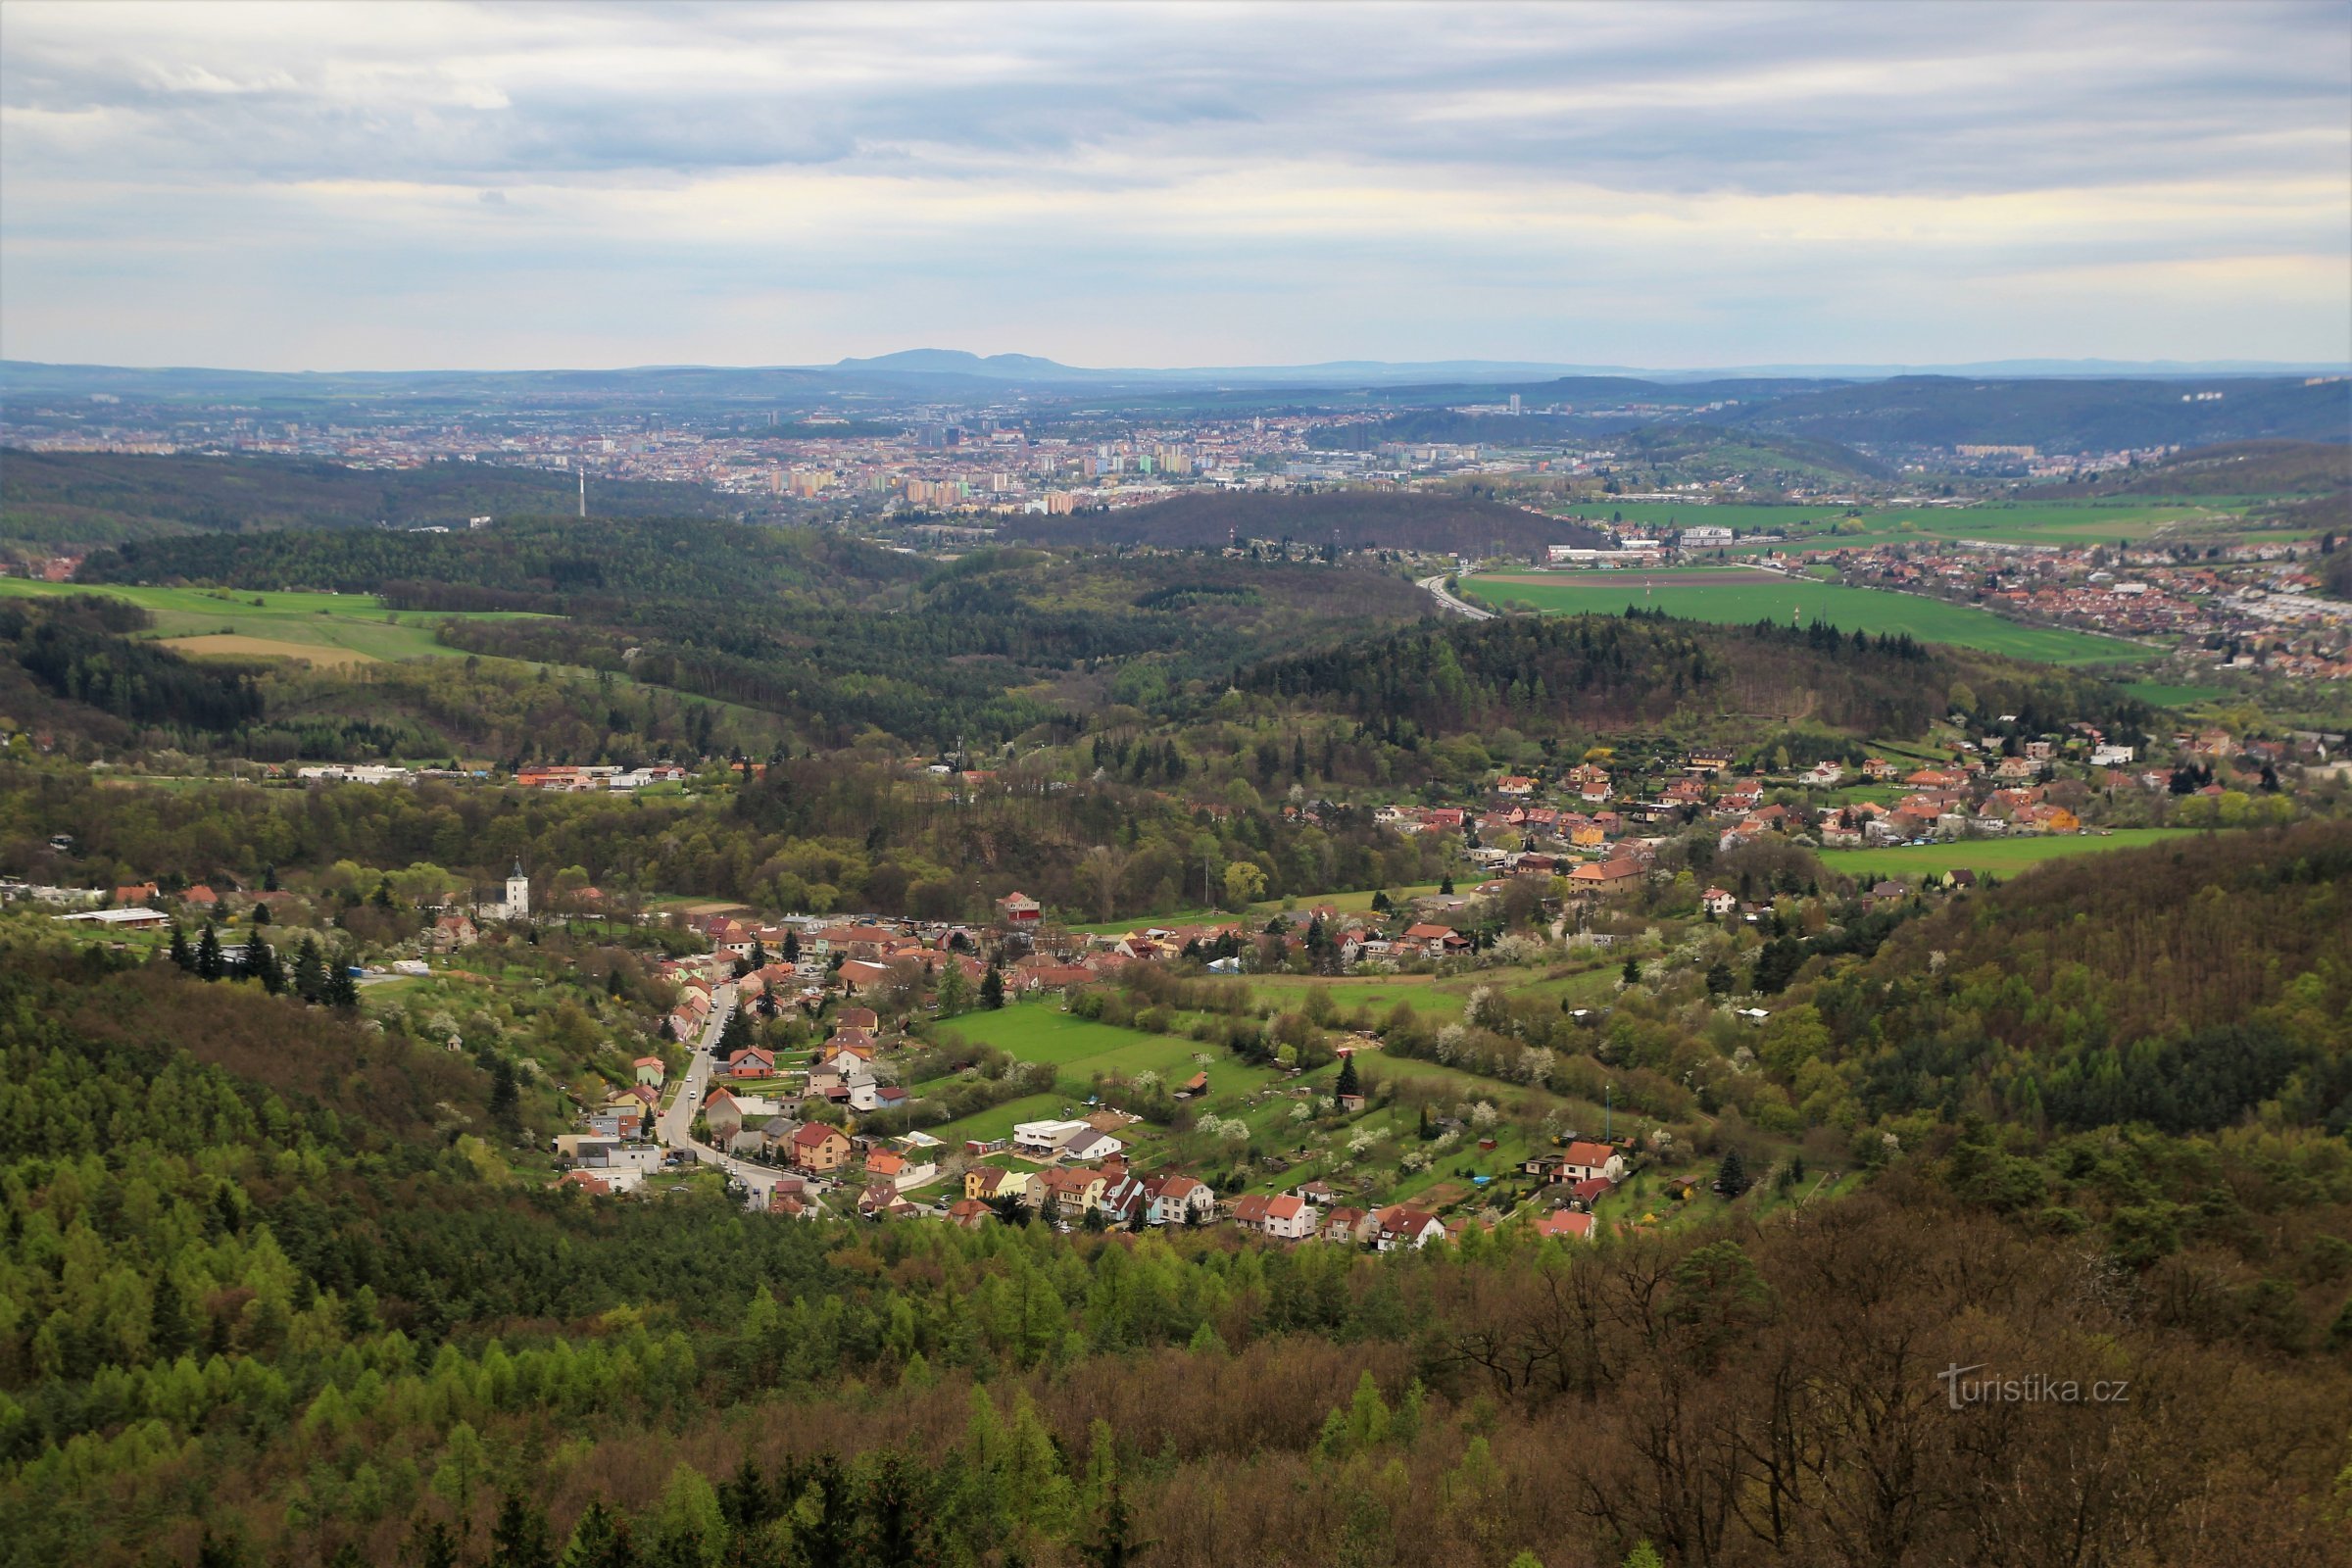 Näkymä kohti Brnoa, horisontissa Pálavan harju